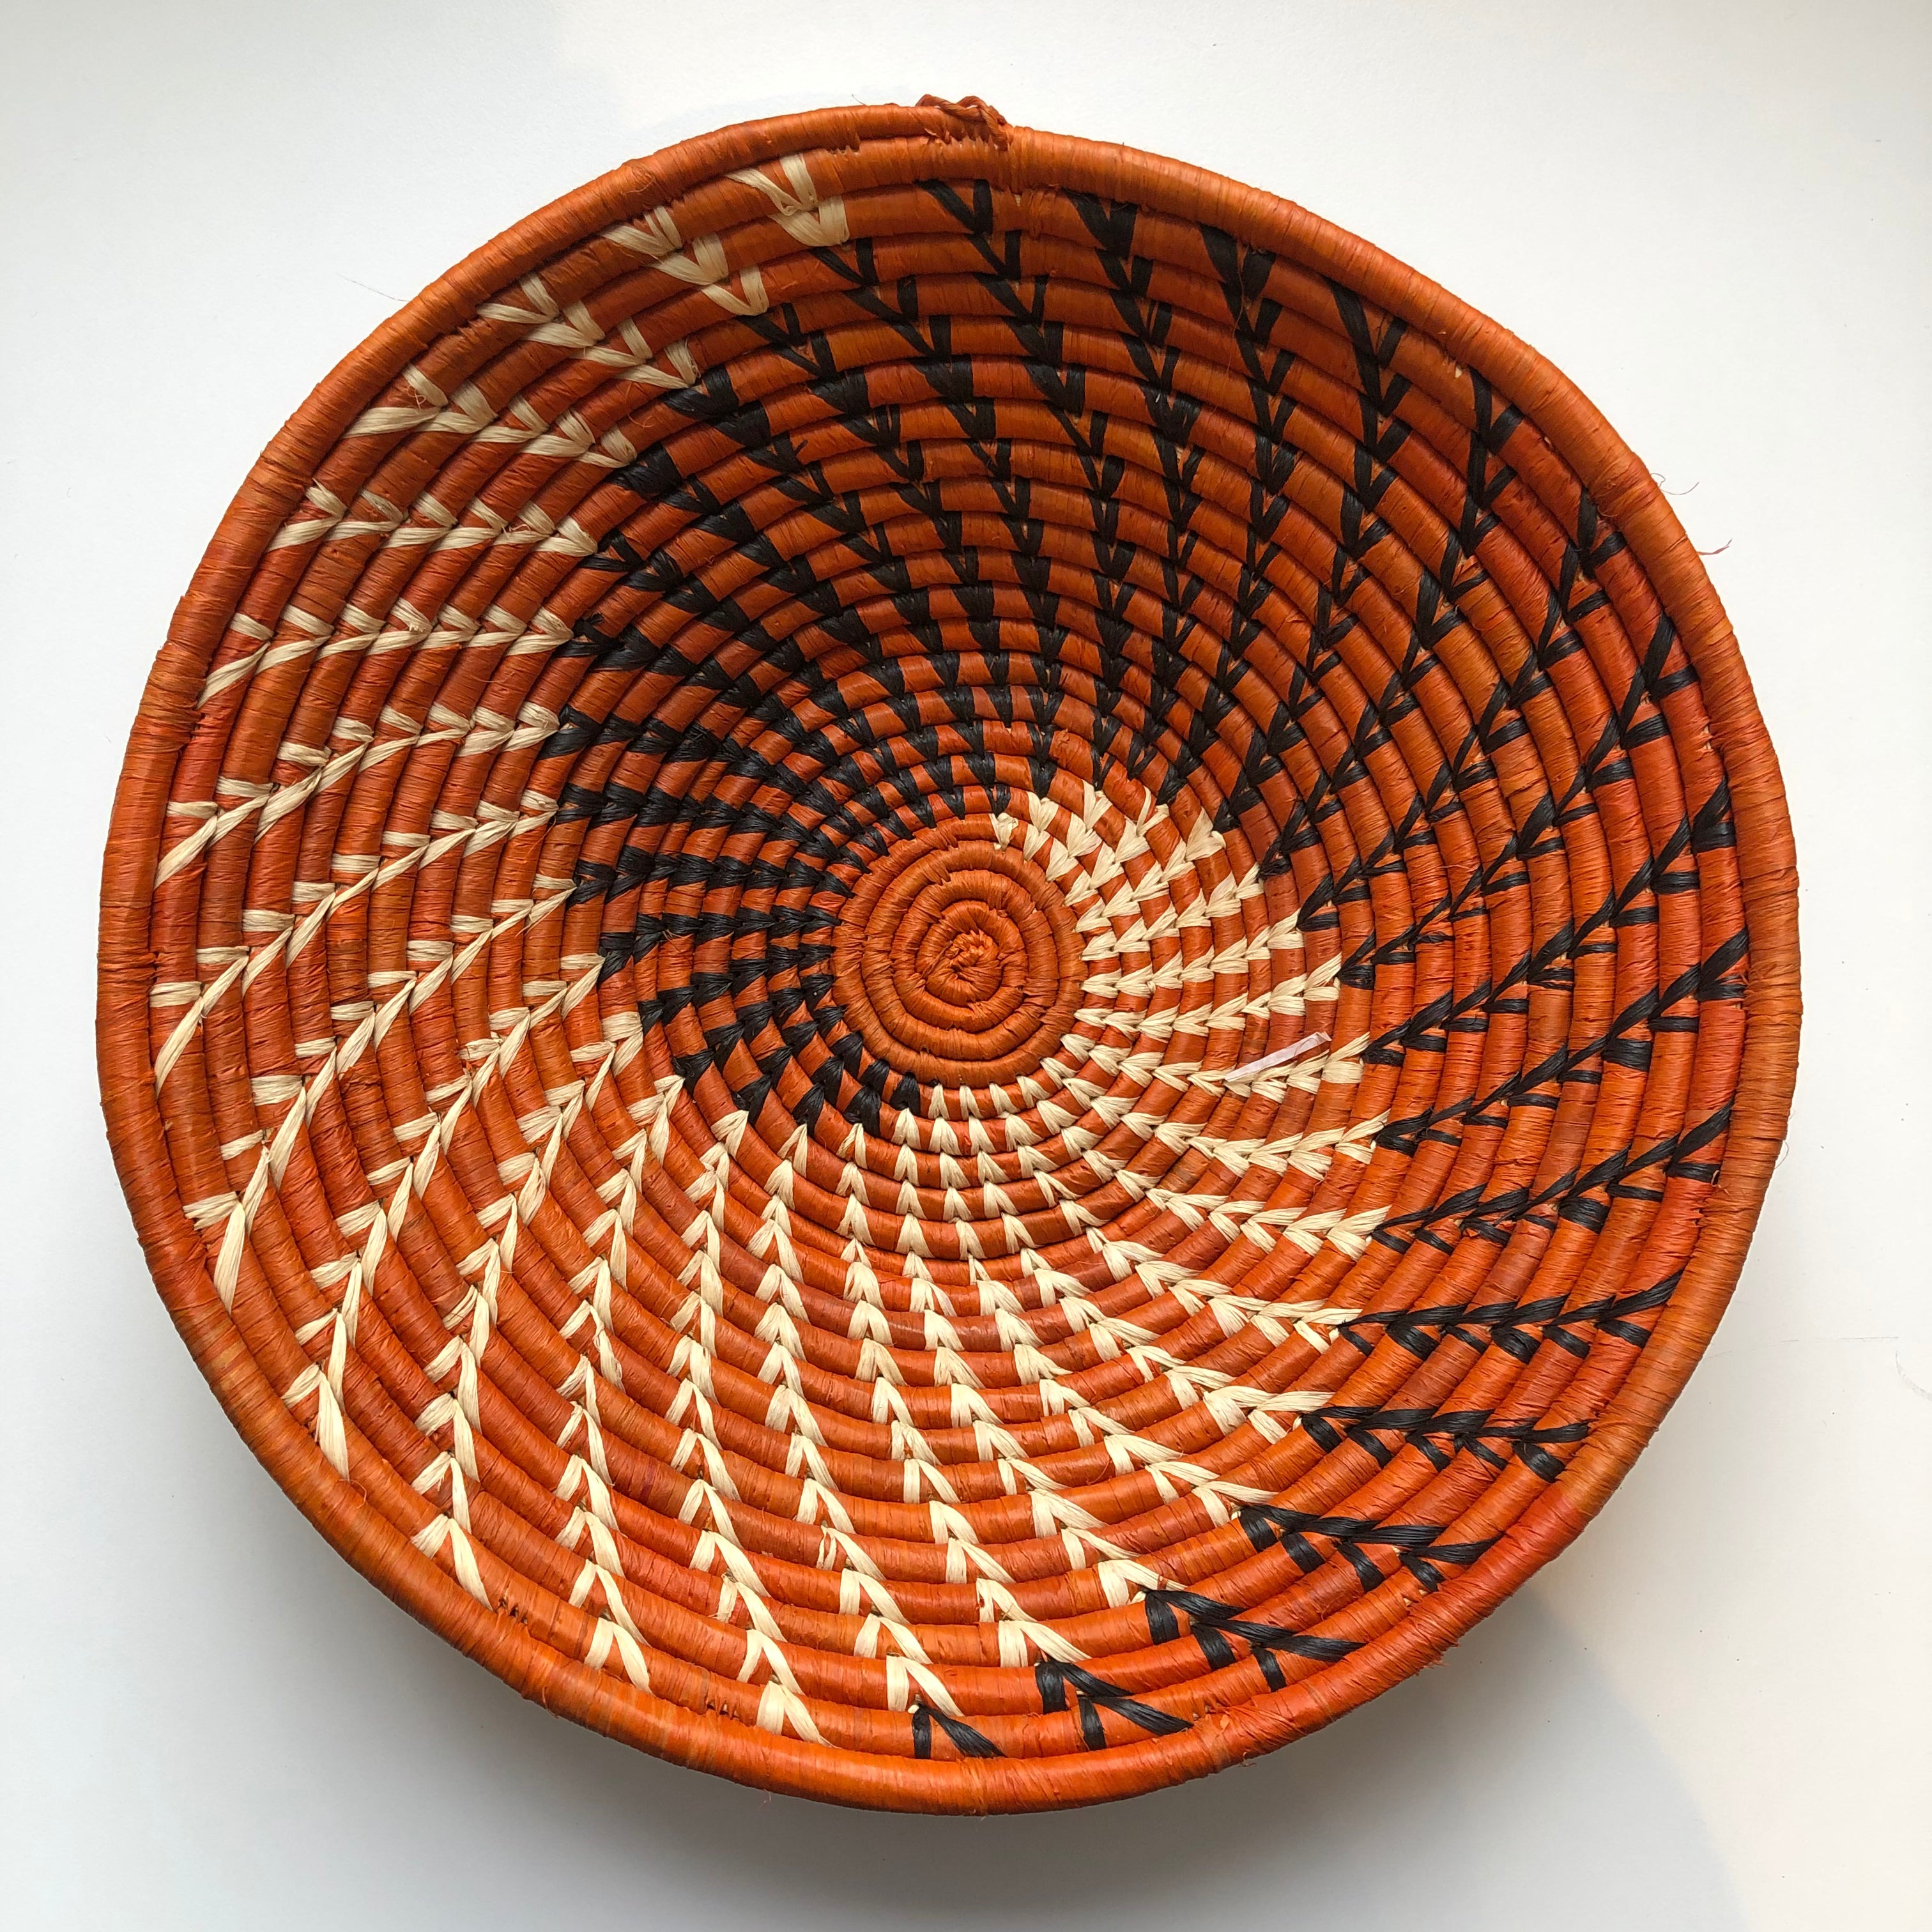 Orange and black swirl woven bowls